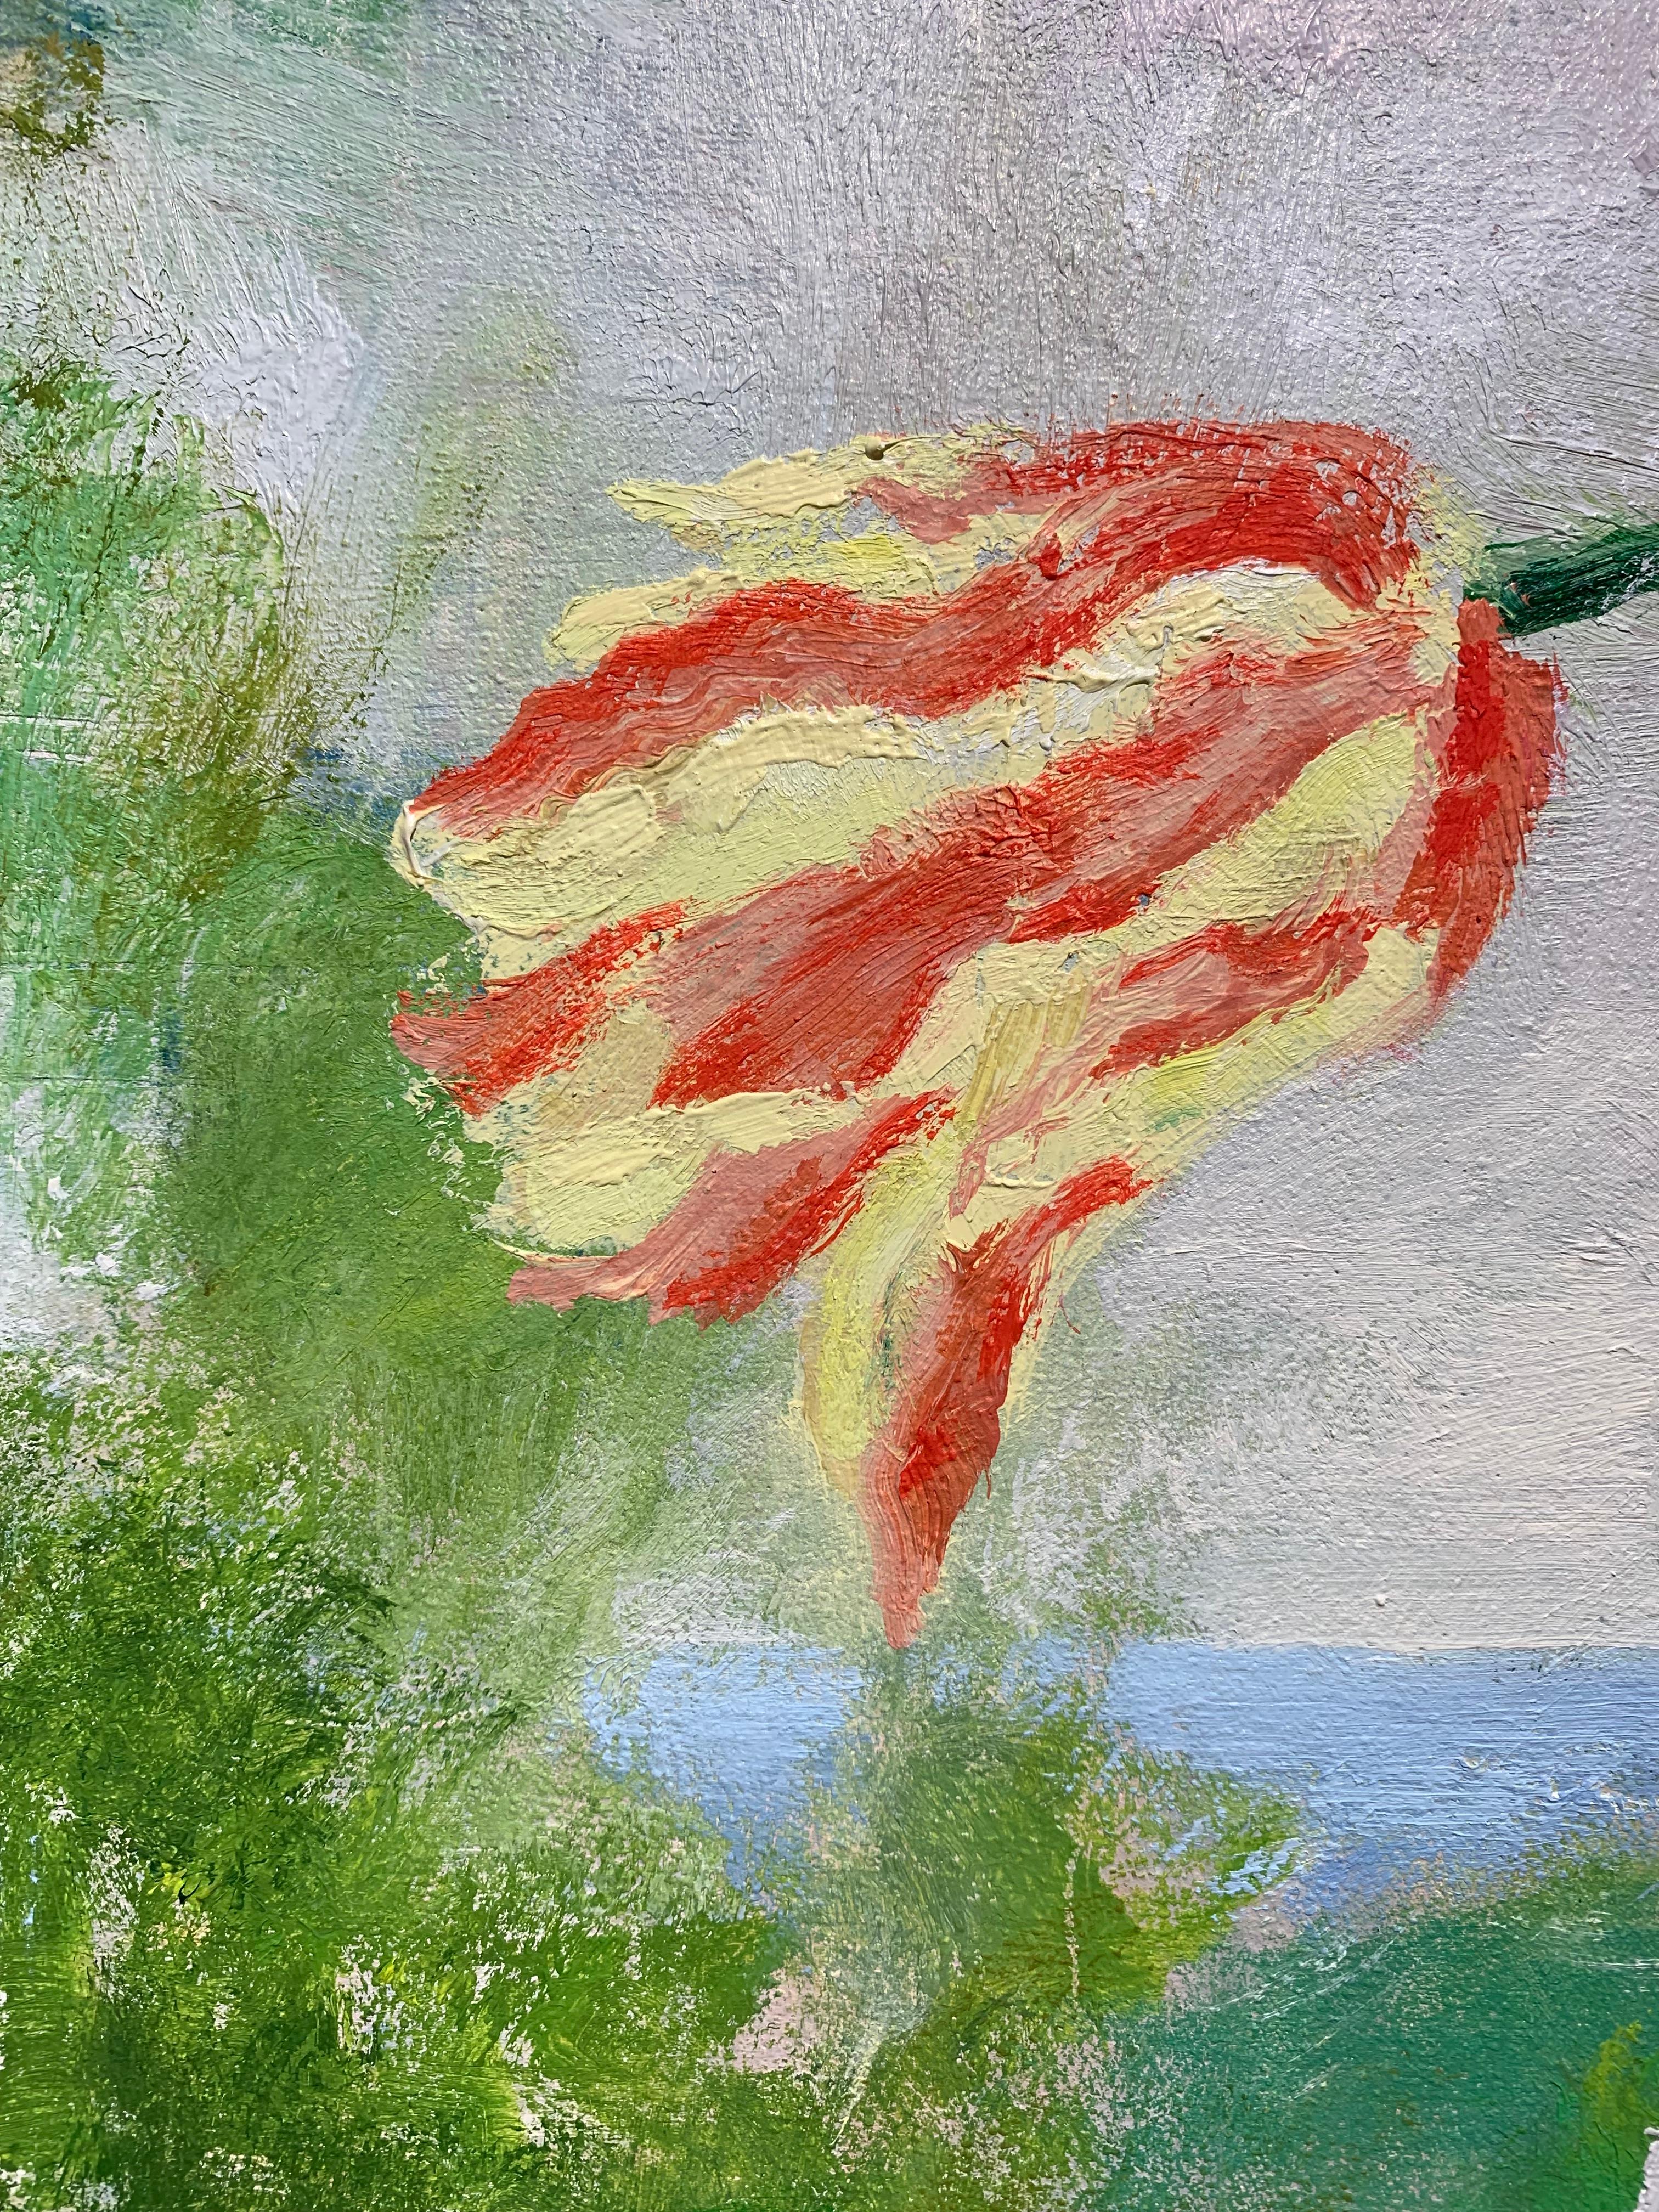 Melanie Parke, Sunday Tulip, impressionist oil on canvas floral still life, 2019 2